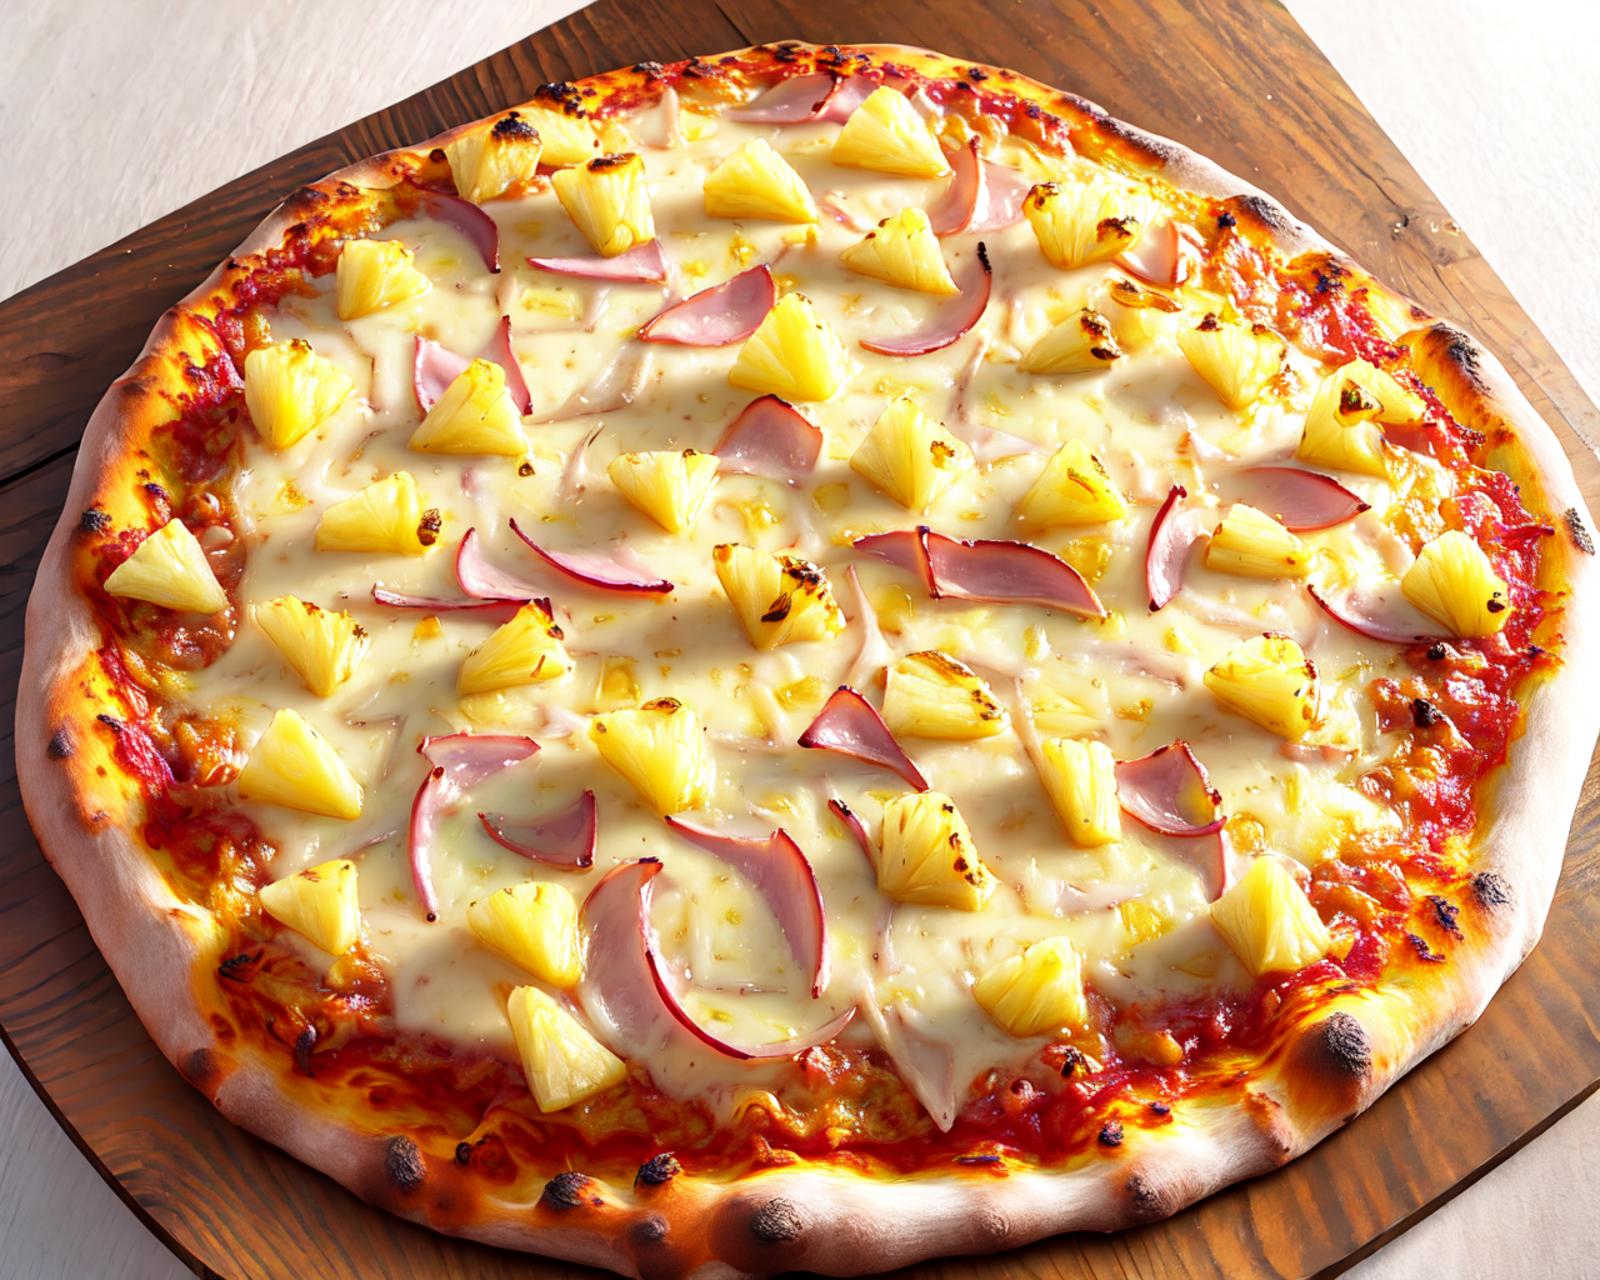 pineapple pizza image by uiouiouio